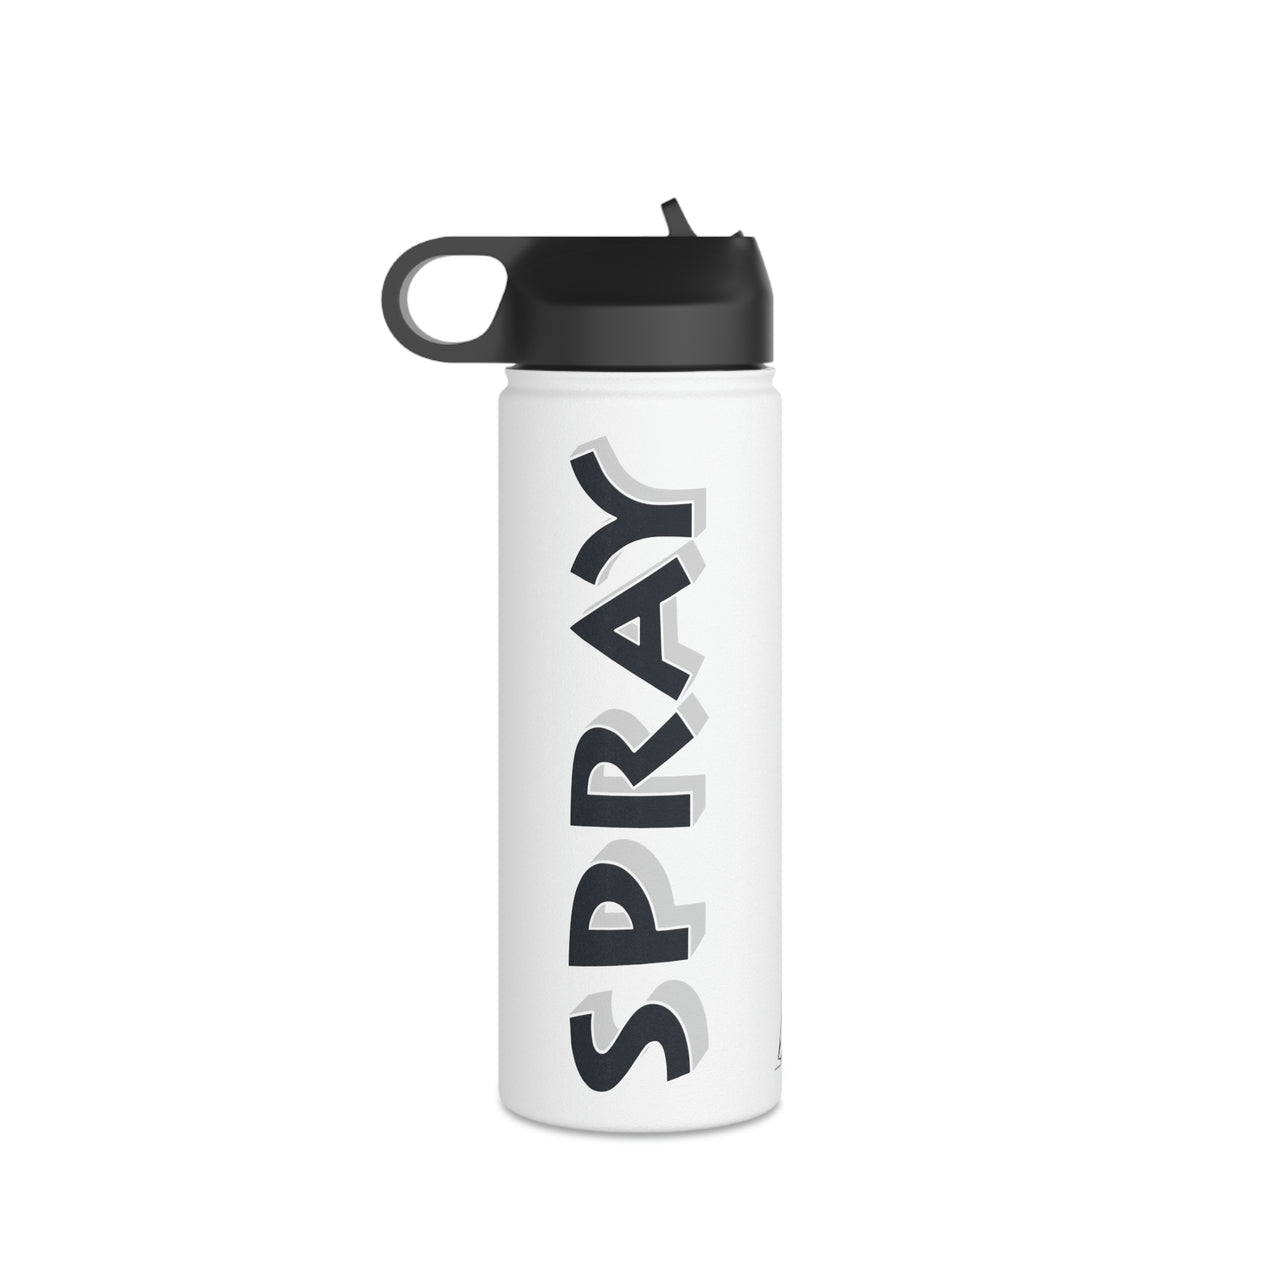 SPRAY- Stainless Steel Water Bottle, Standard Lid